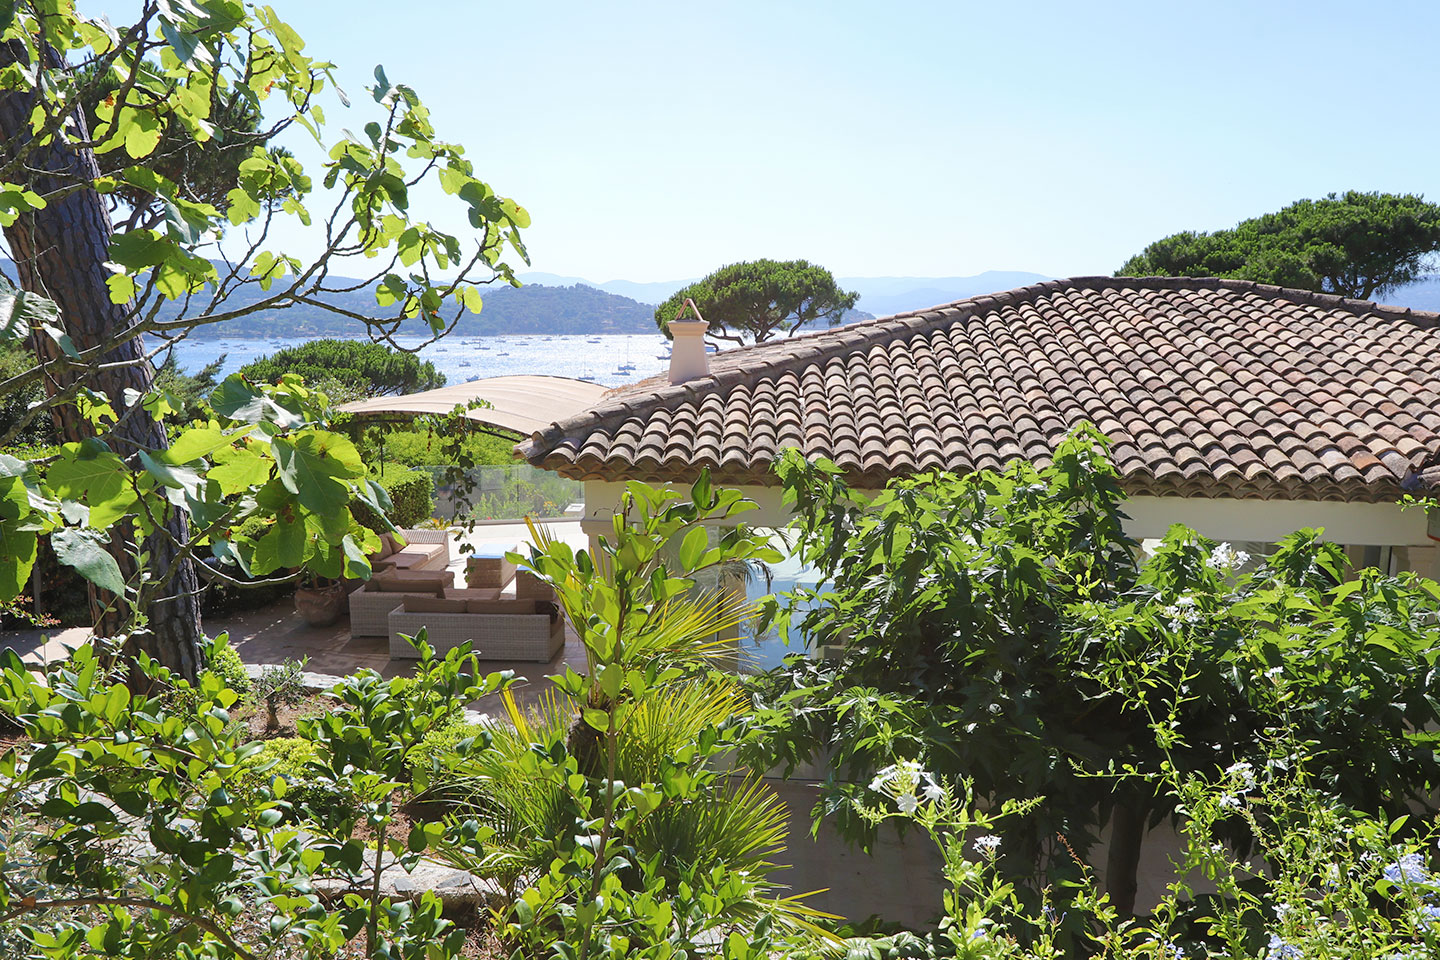 Luxury Property in Les Parcs de Saint Tropez, Côte d'Azur, France • Outdoor View | Listed by Bernard Corcos, CEO of Finest International | FINEST RESIDENCES